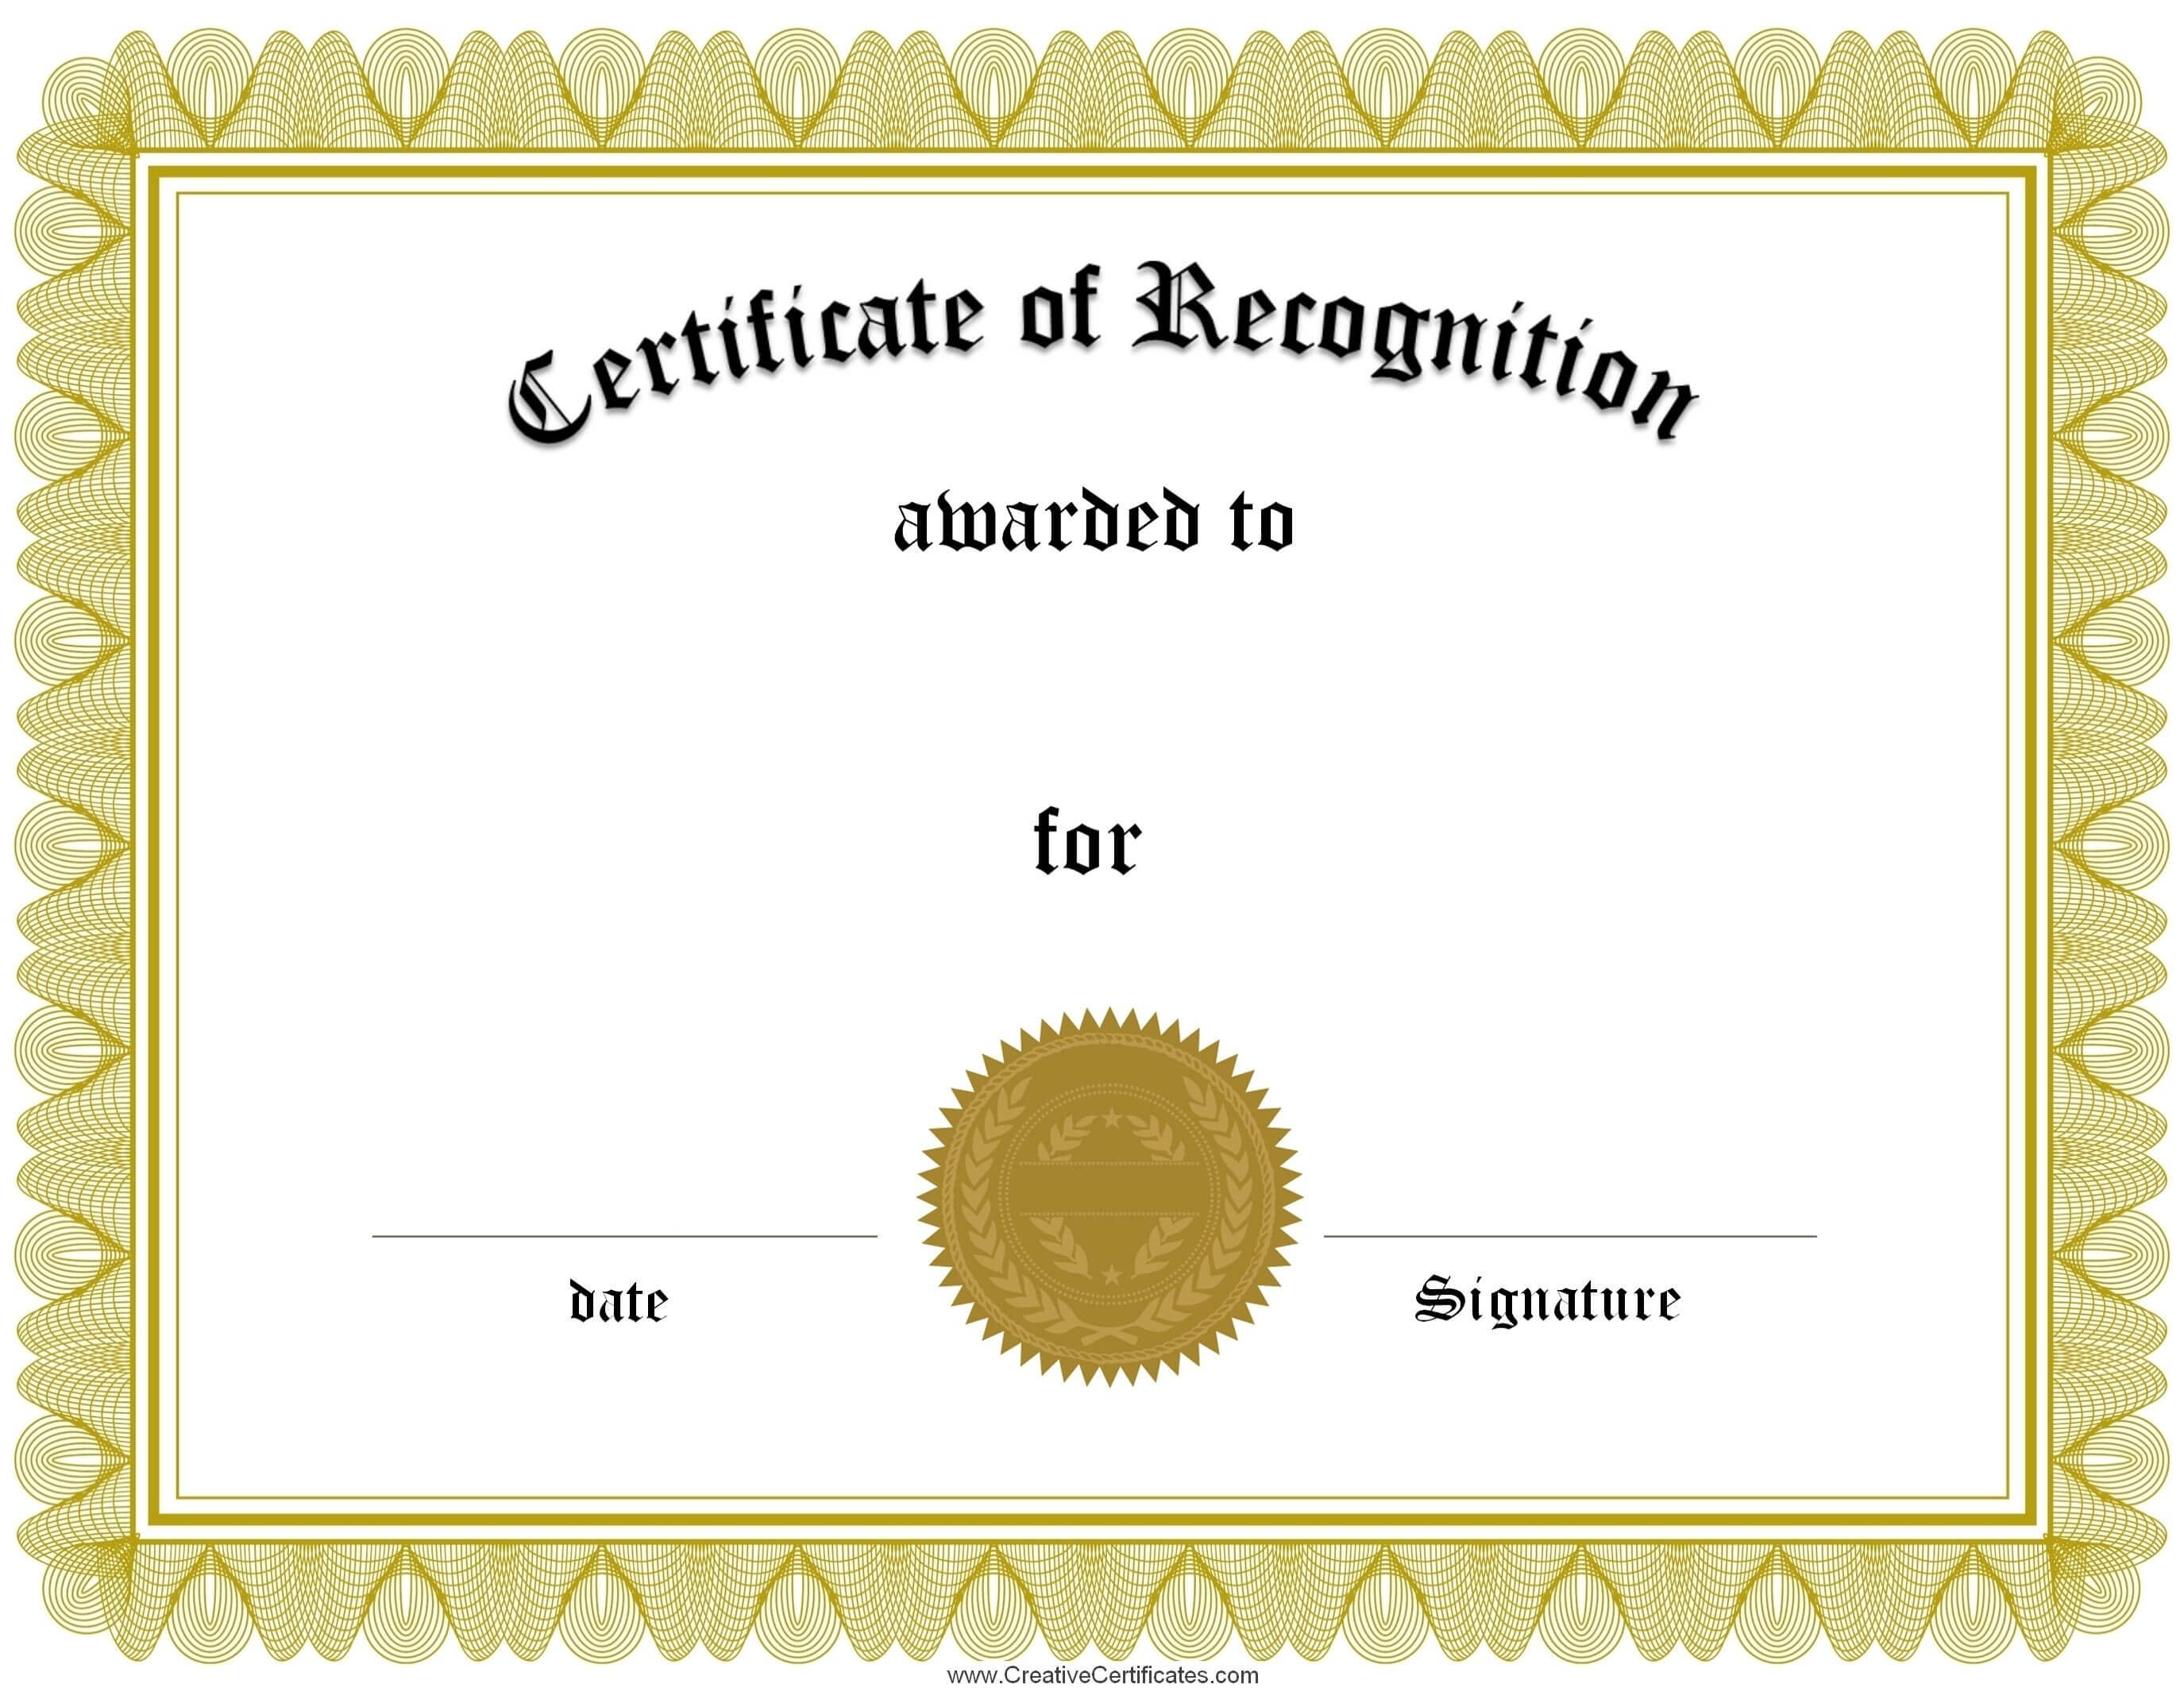 certificates-inspiring-recognition-certificate-template-for-employee-recognition-certificates